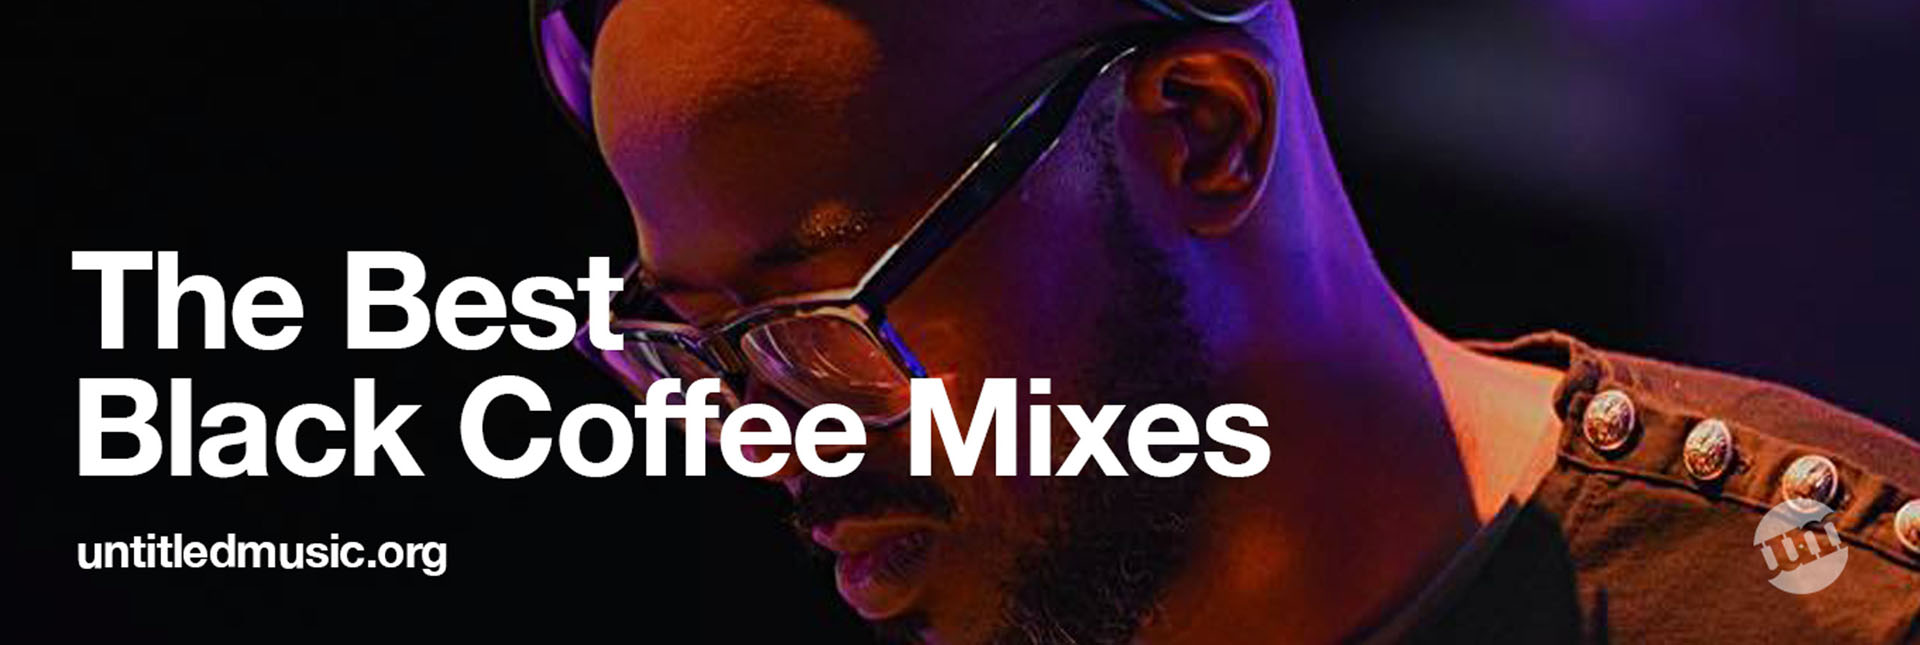 The Best Black Coffee Mixes Deep House Music Blog